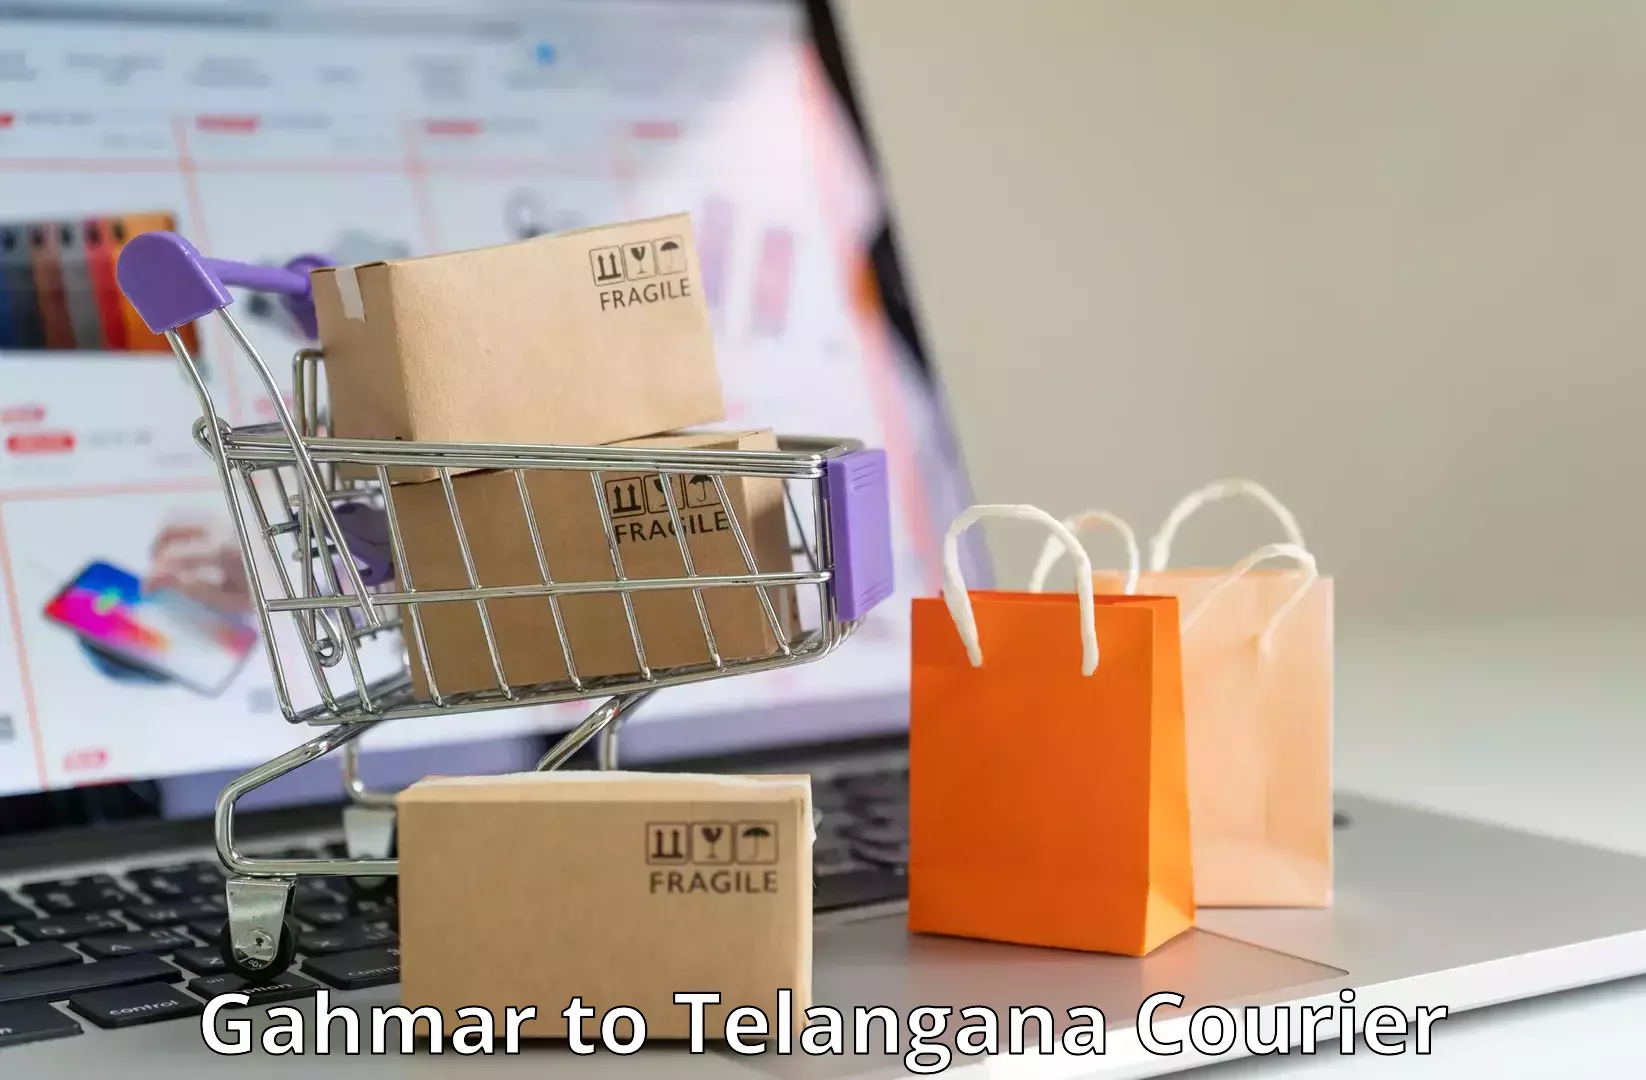 Courier service innovation Gahmar to Telangana